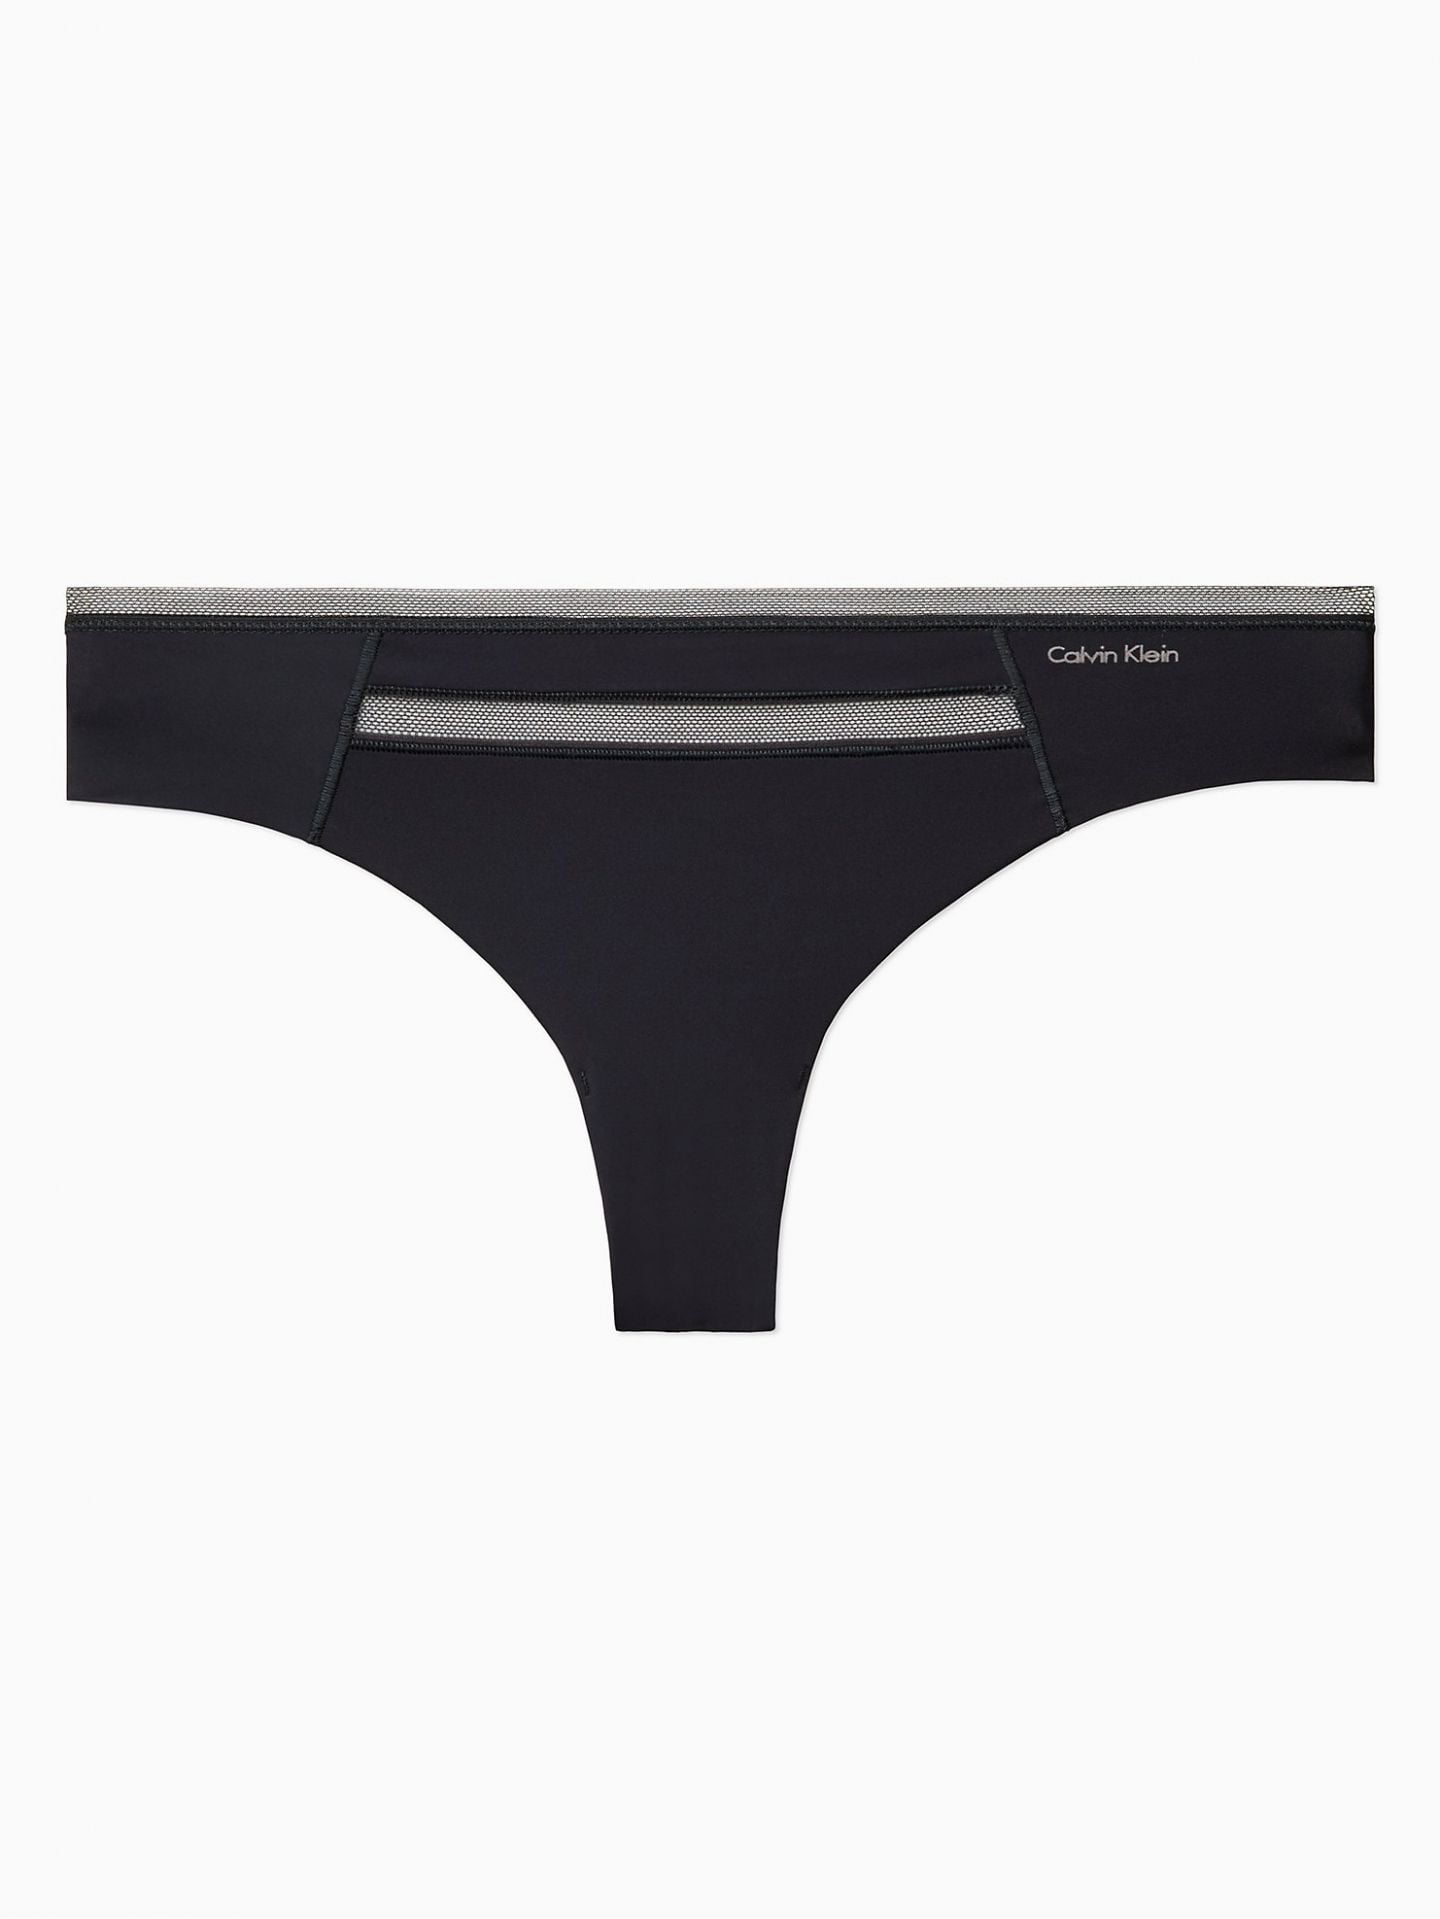 Calvin Klein Womens Invisibles High-Waist Thong Panty Medium Bare 